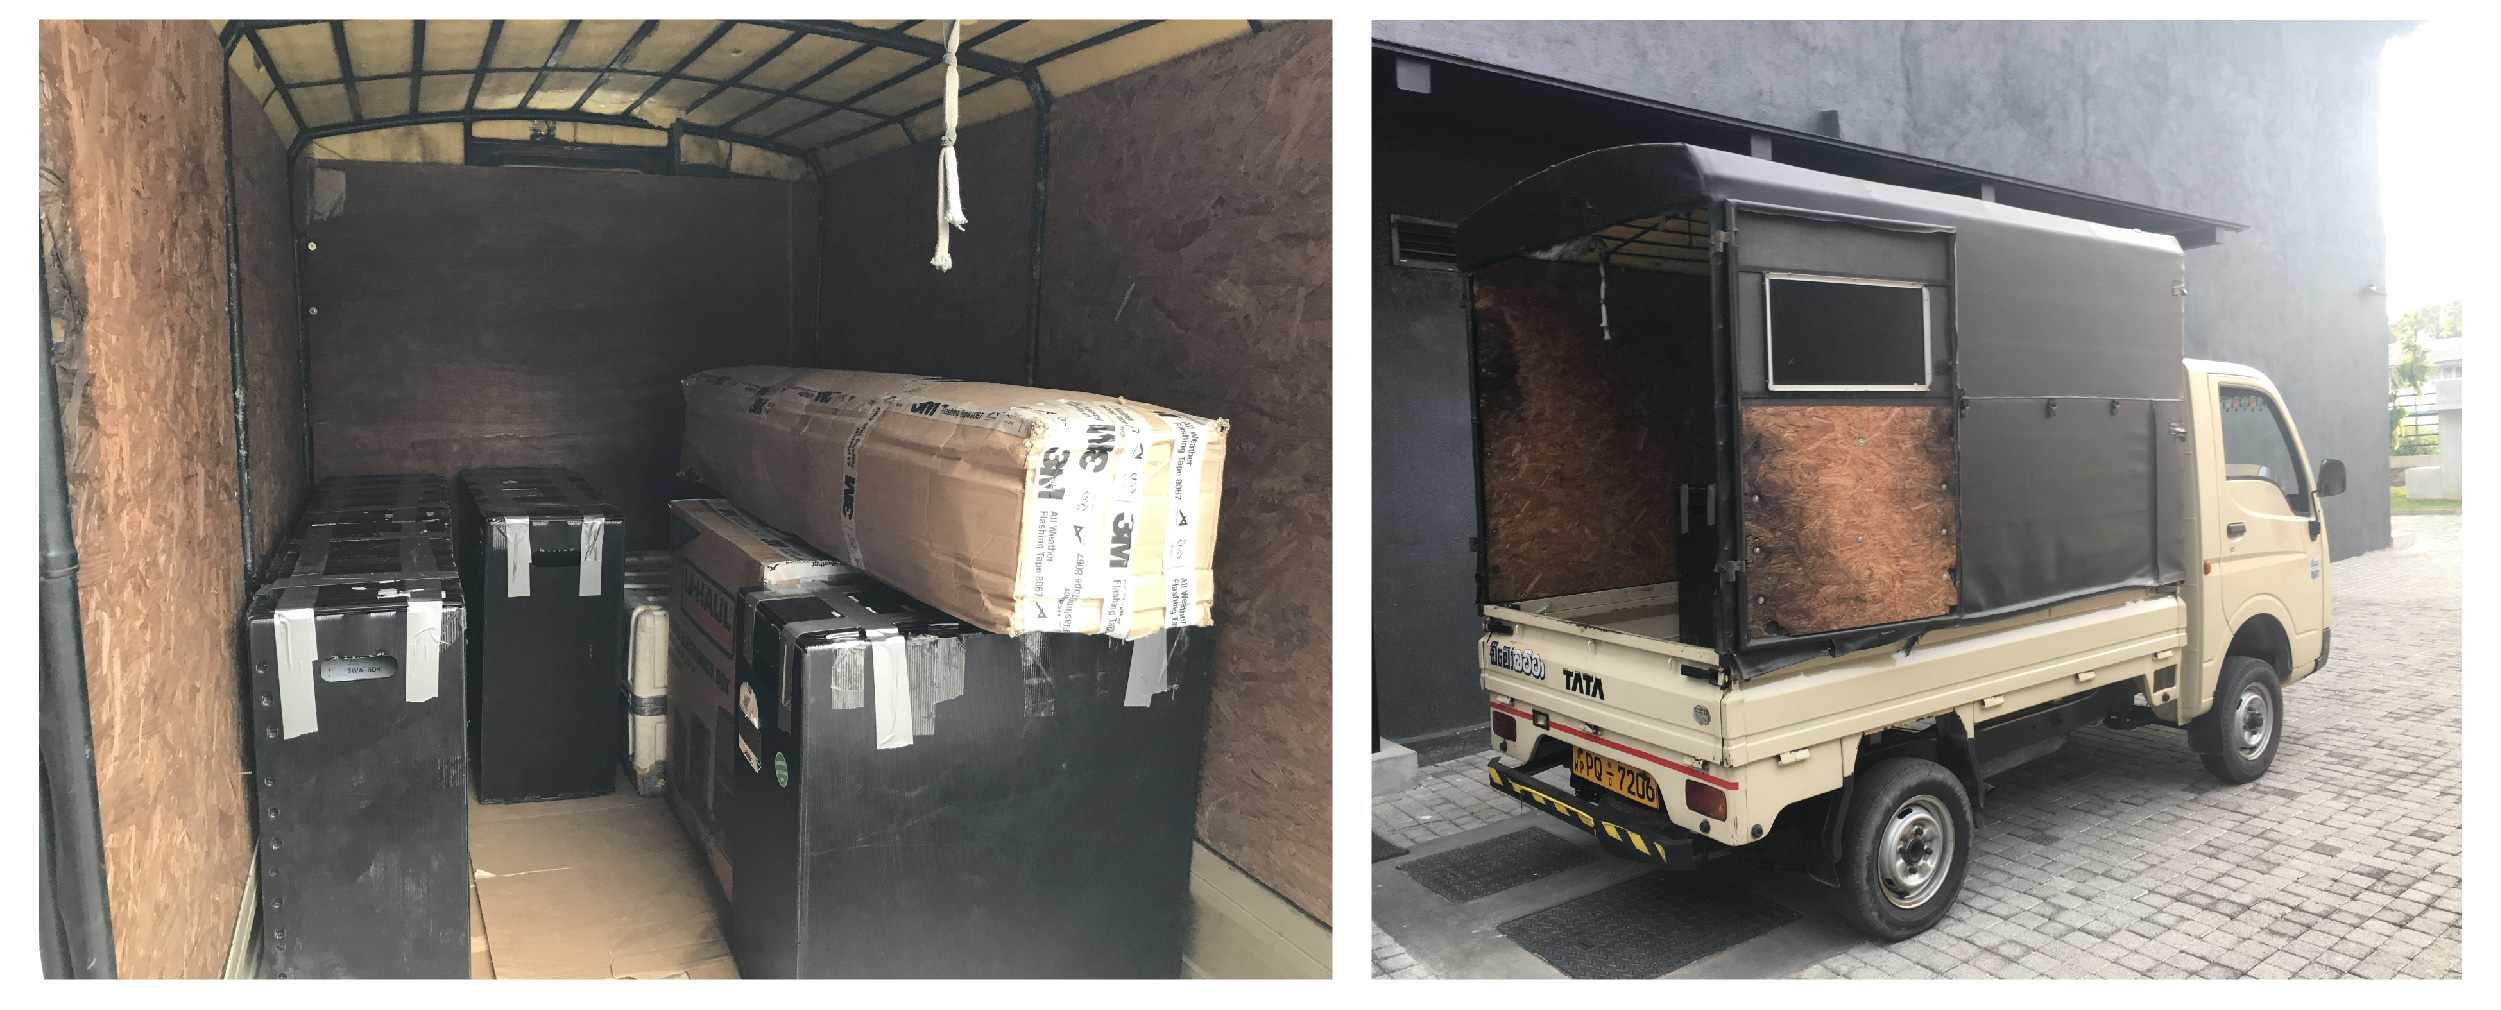 Equipment loaded in Sri Lanka en route back to the USA.